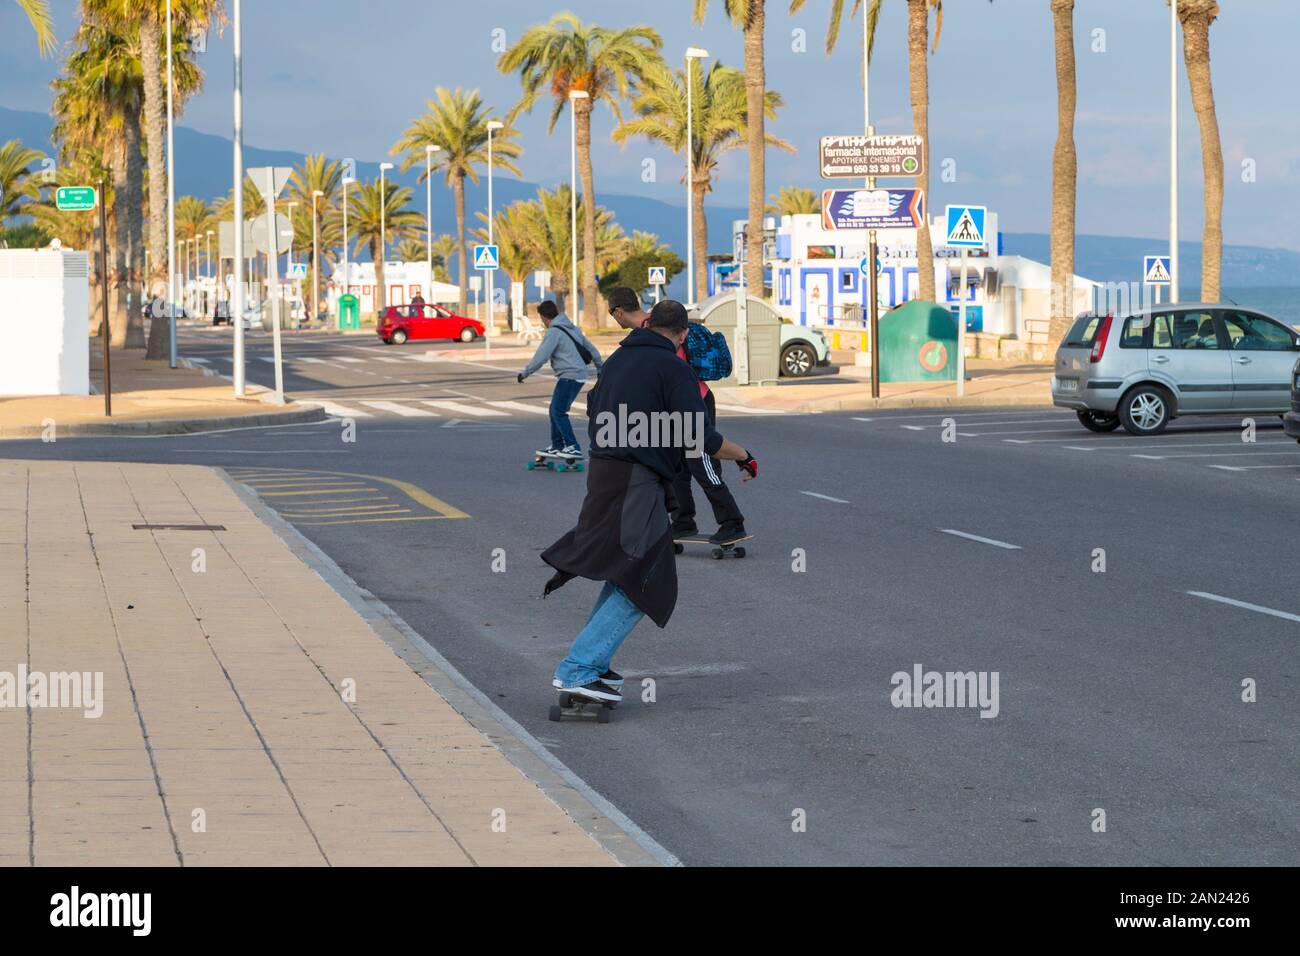 Skateboarders, rue bordée de palmiers, roquetas de mar, almeria, espagne Banque D'Images